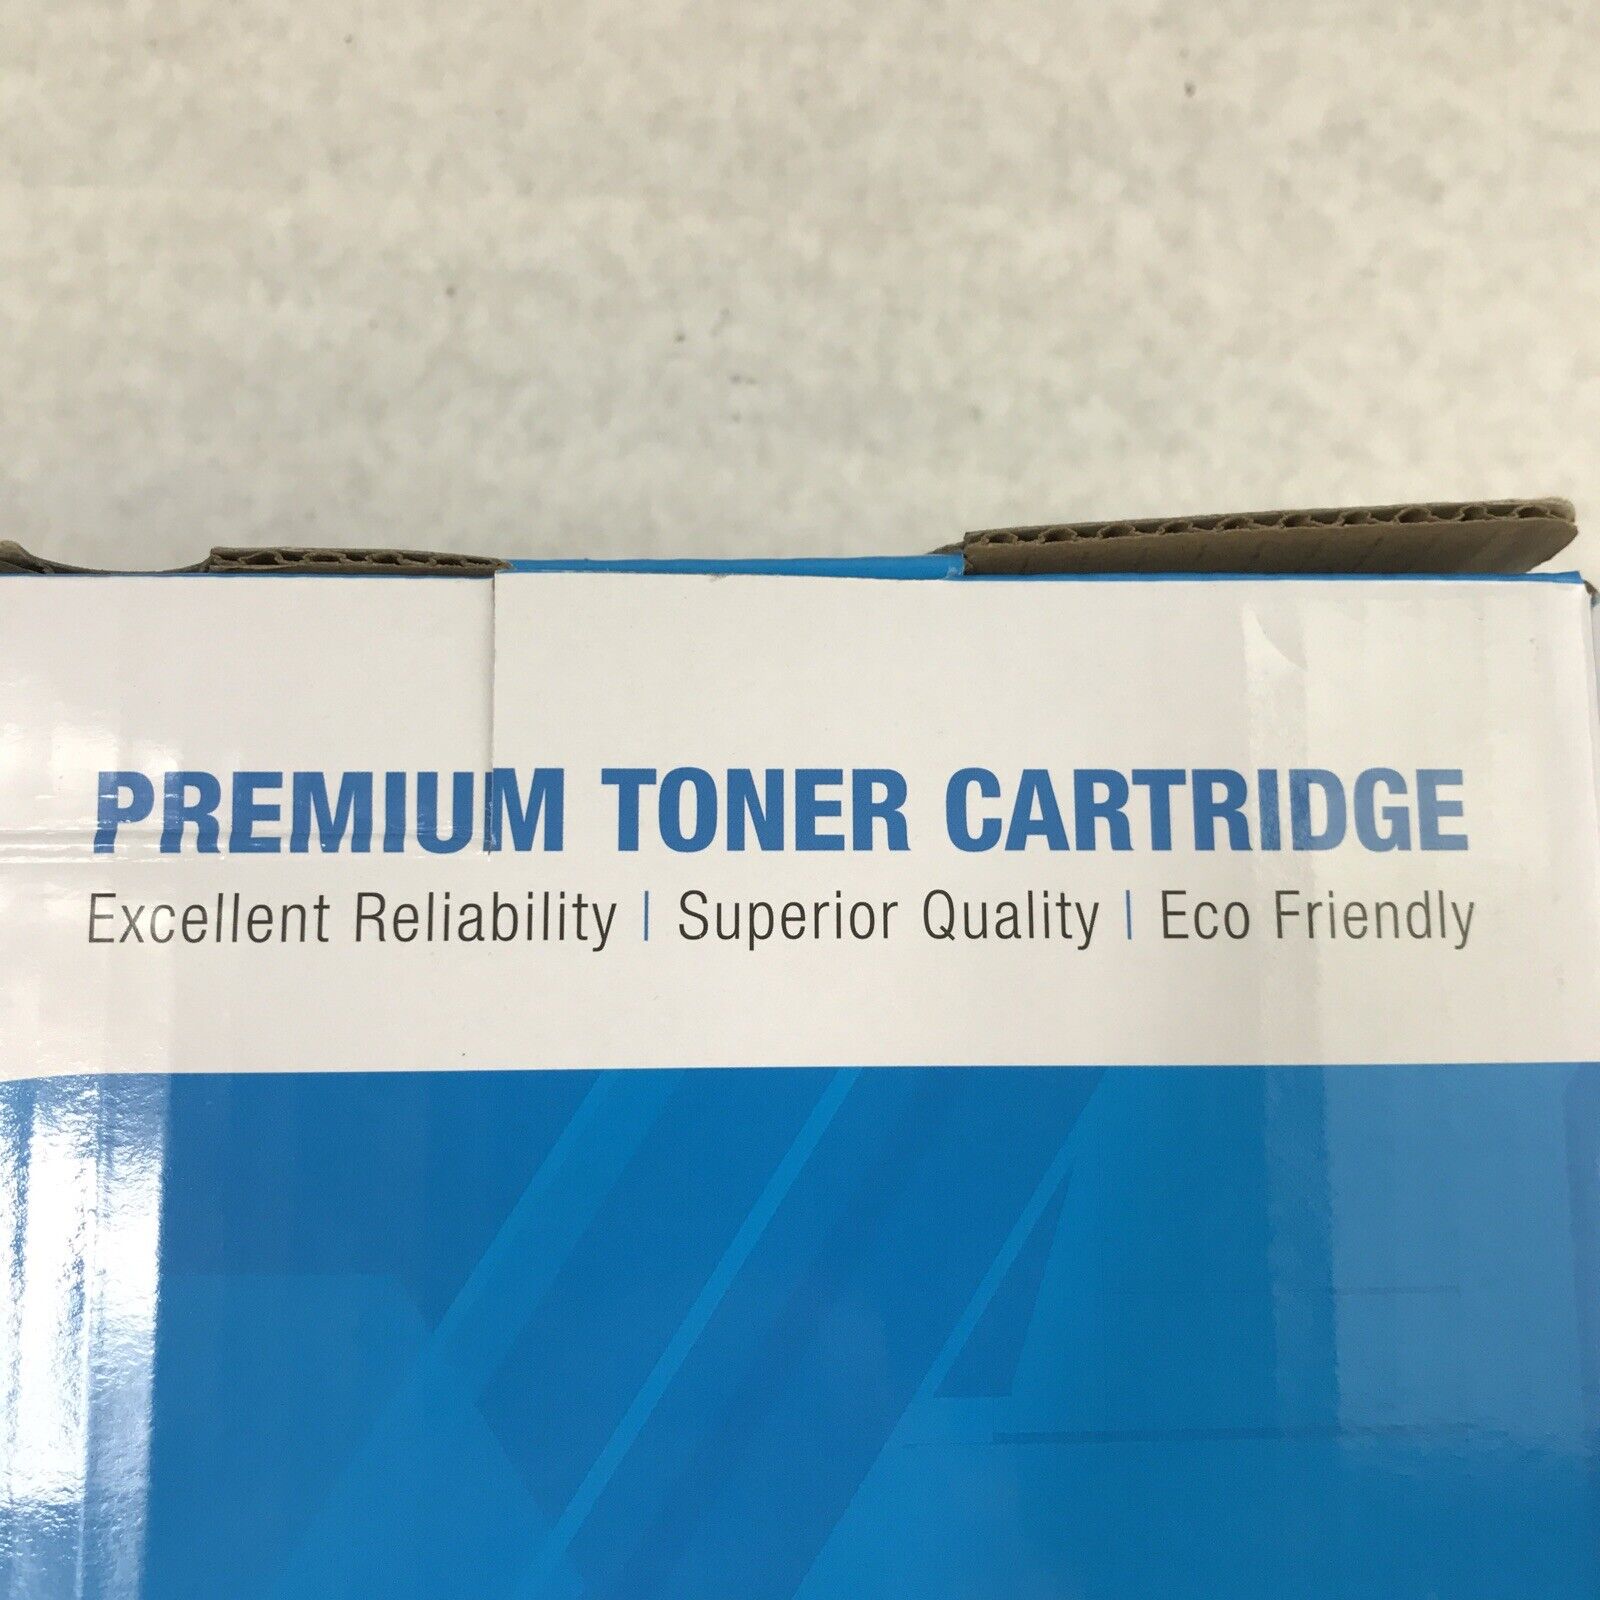 5 piece True Image Premium Toner Cartridge Superior Quality for HP 410A